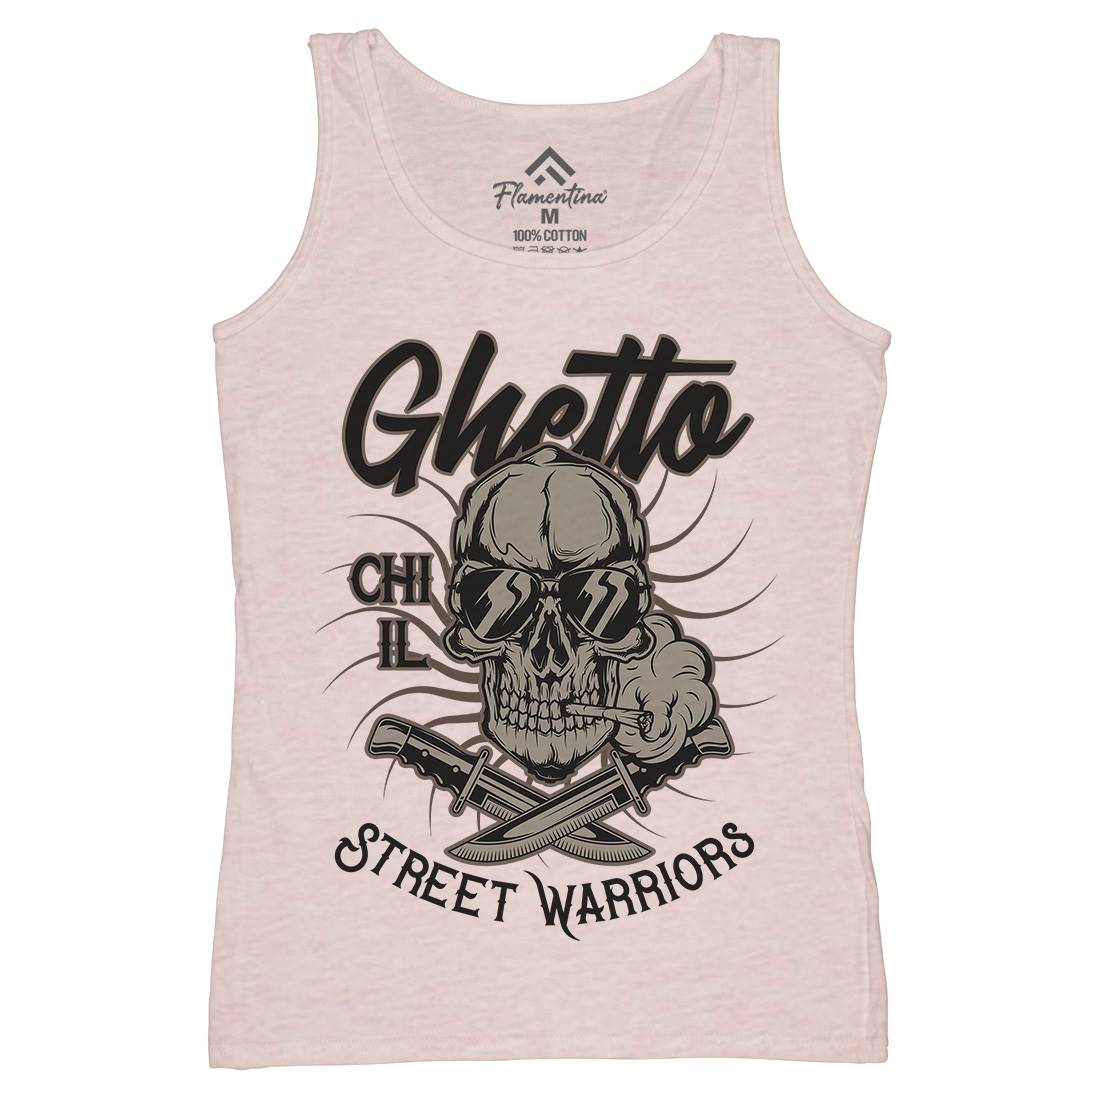 Ghetto Street Warriors Womens Organic Tank Top Vest Retro D937